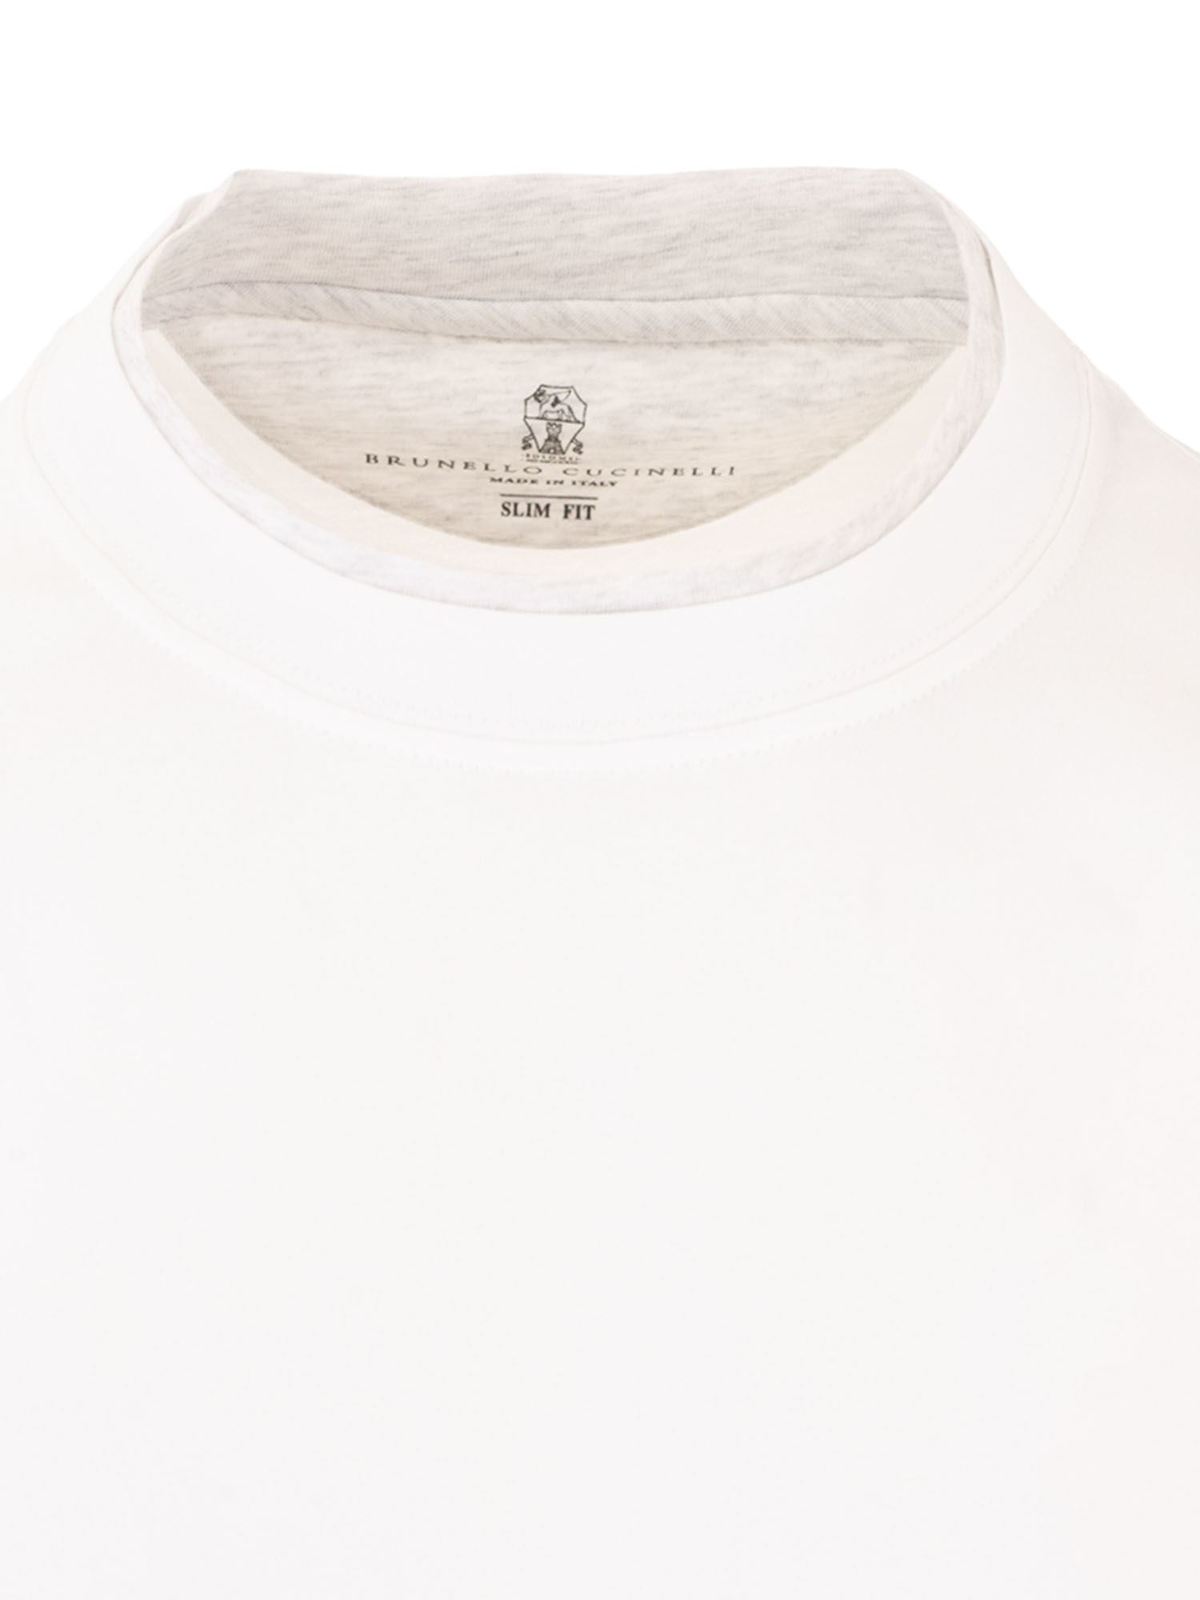 Tシャツ Brunello Cucinelli - Tシャツ - 白 - M0T617427GCW787